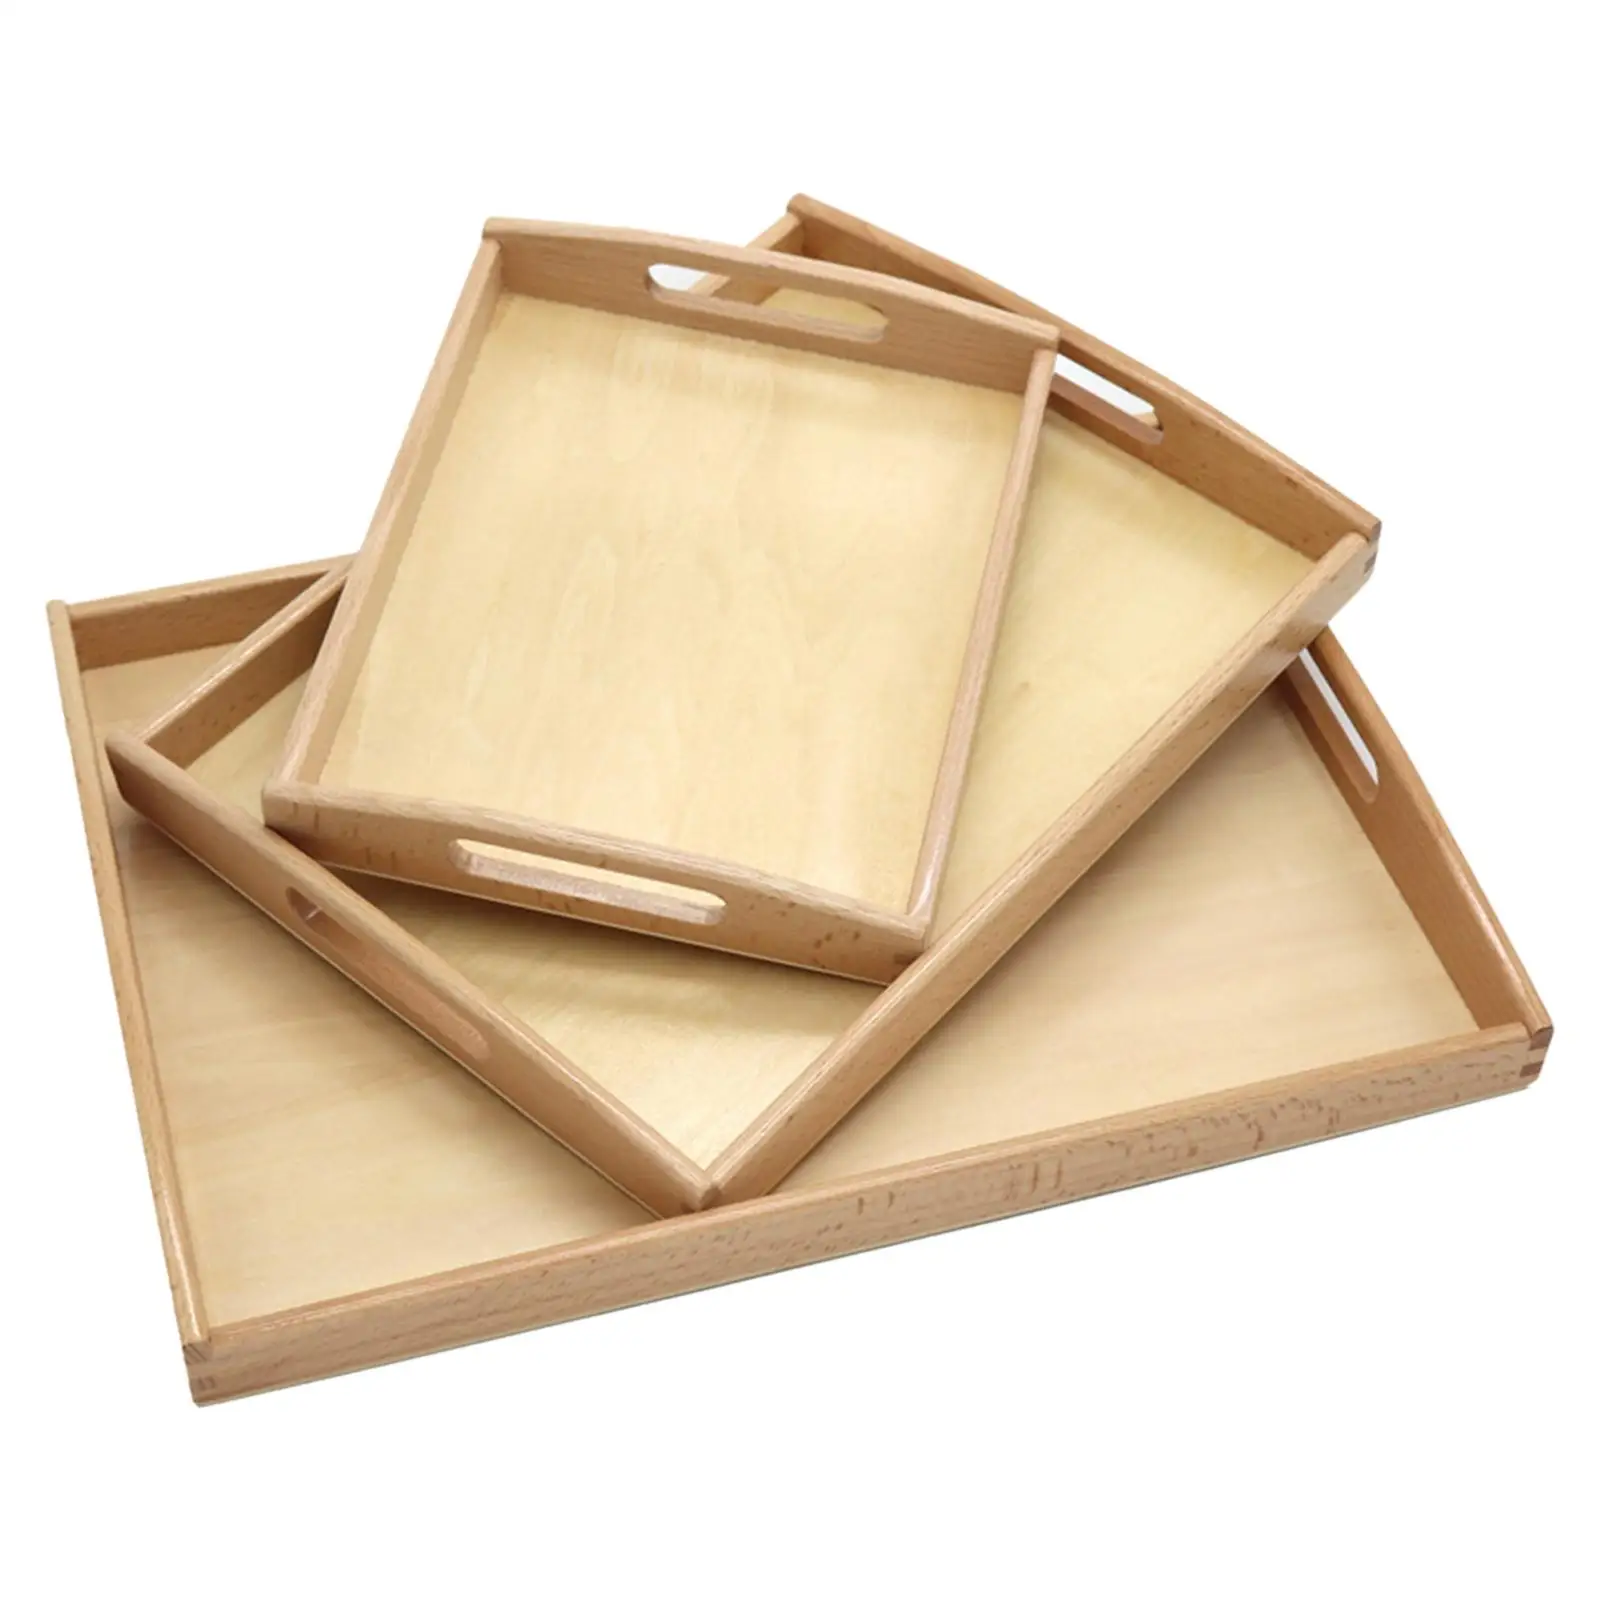 , Durable  Sand  Toy, Light Educational Rectangular Shape Wood  for Training Teaching  Activities